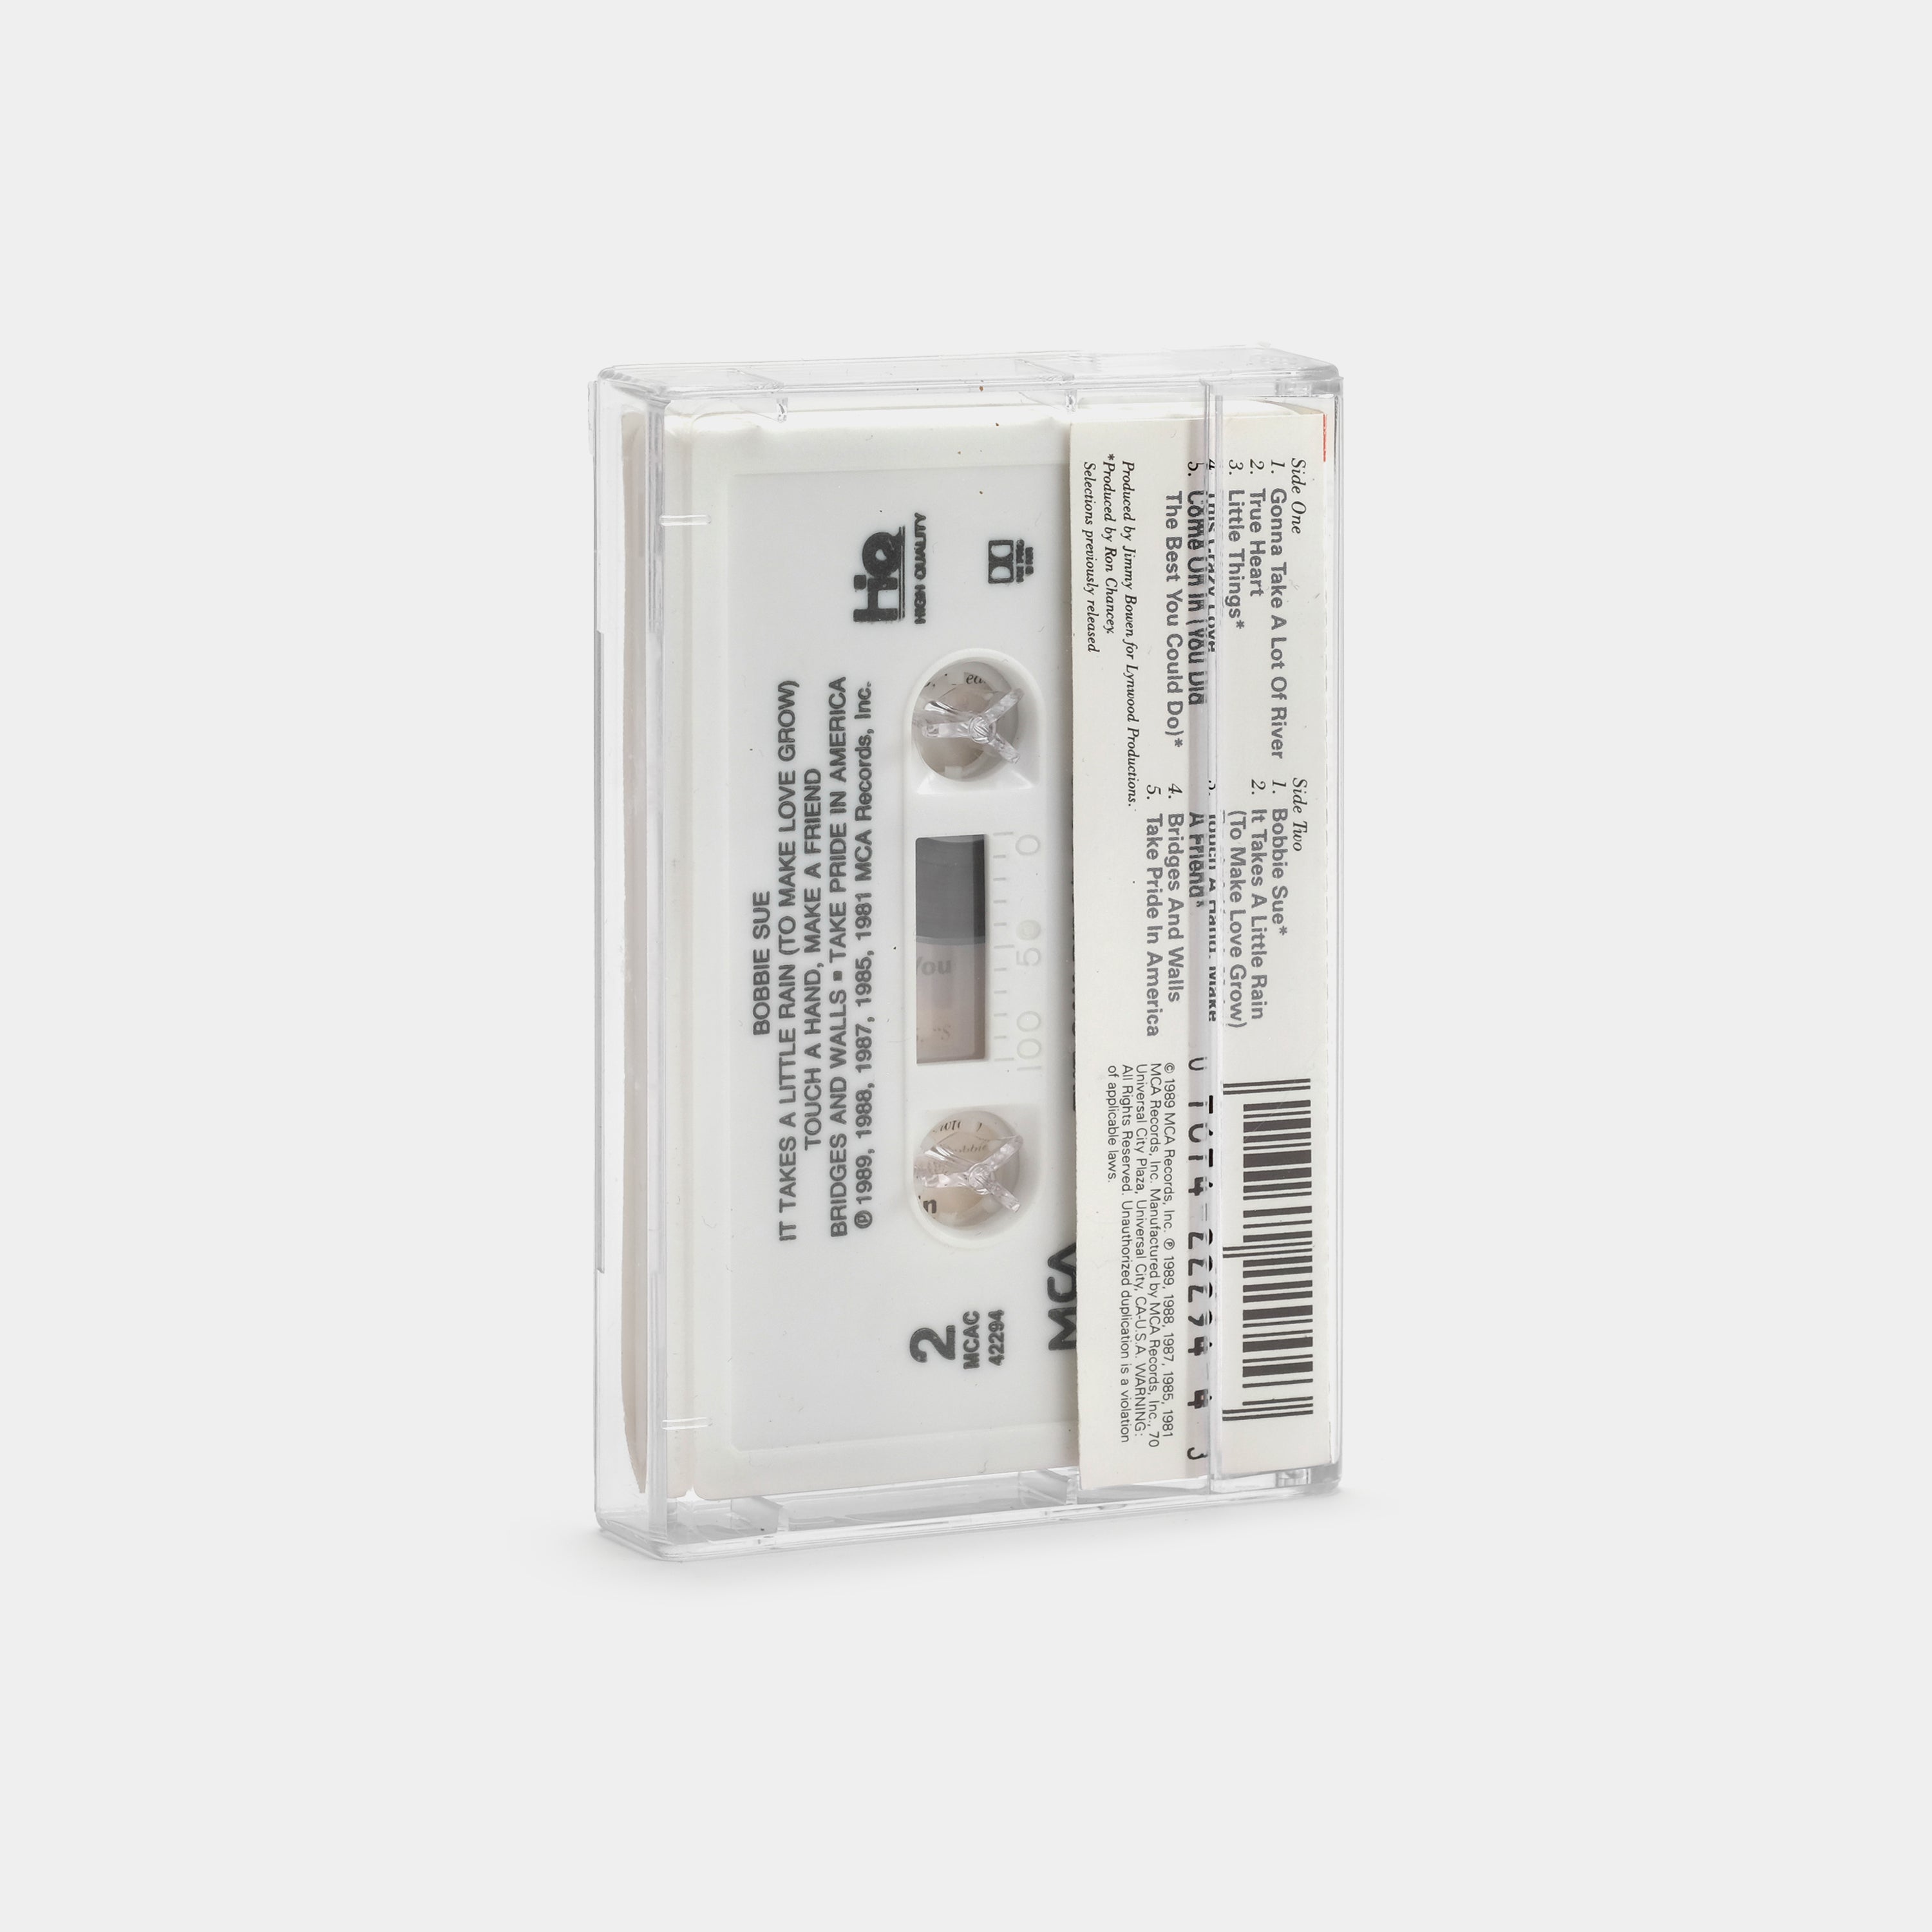 The Oak Ridge Boys - Greatest Hits Volume 3 Cassette Tape